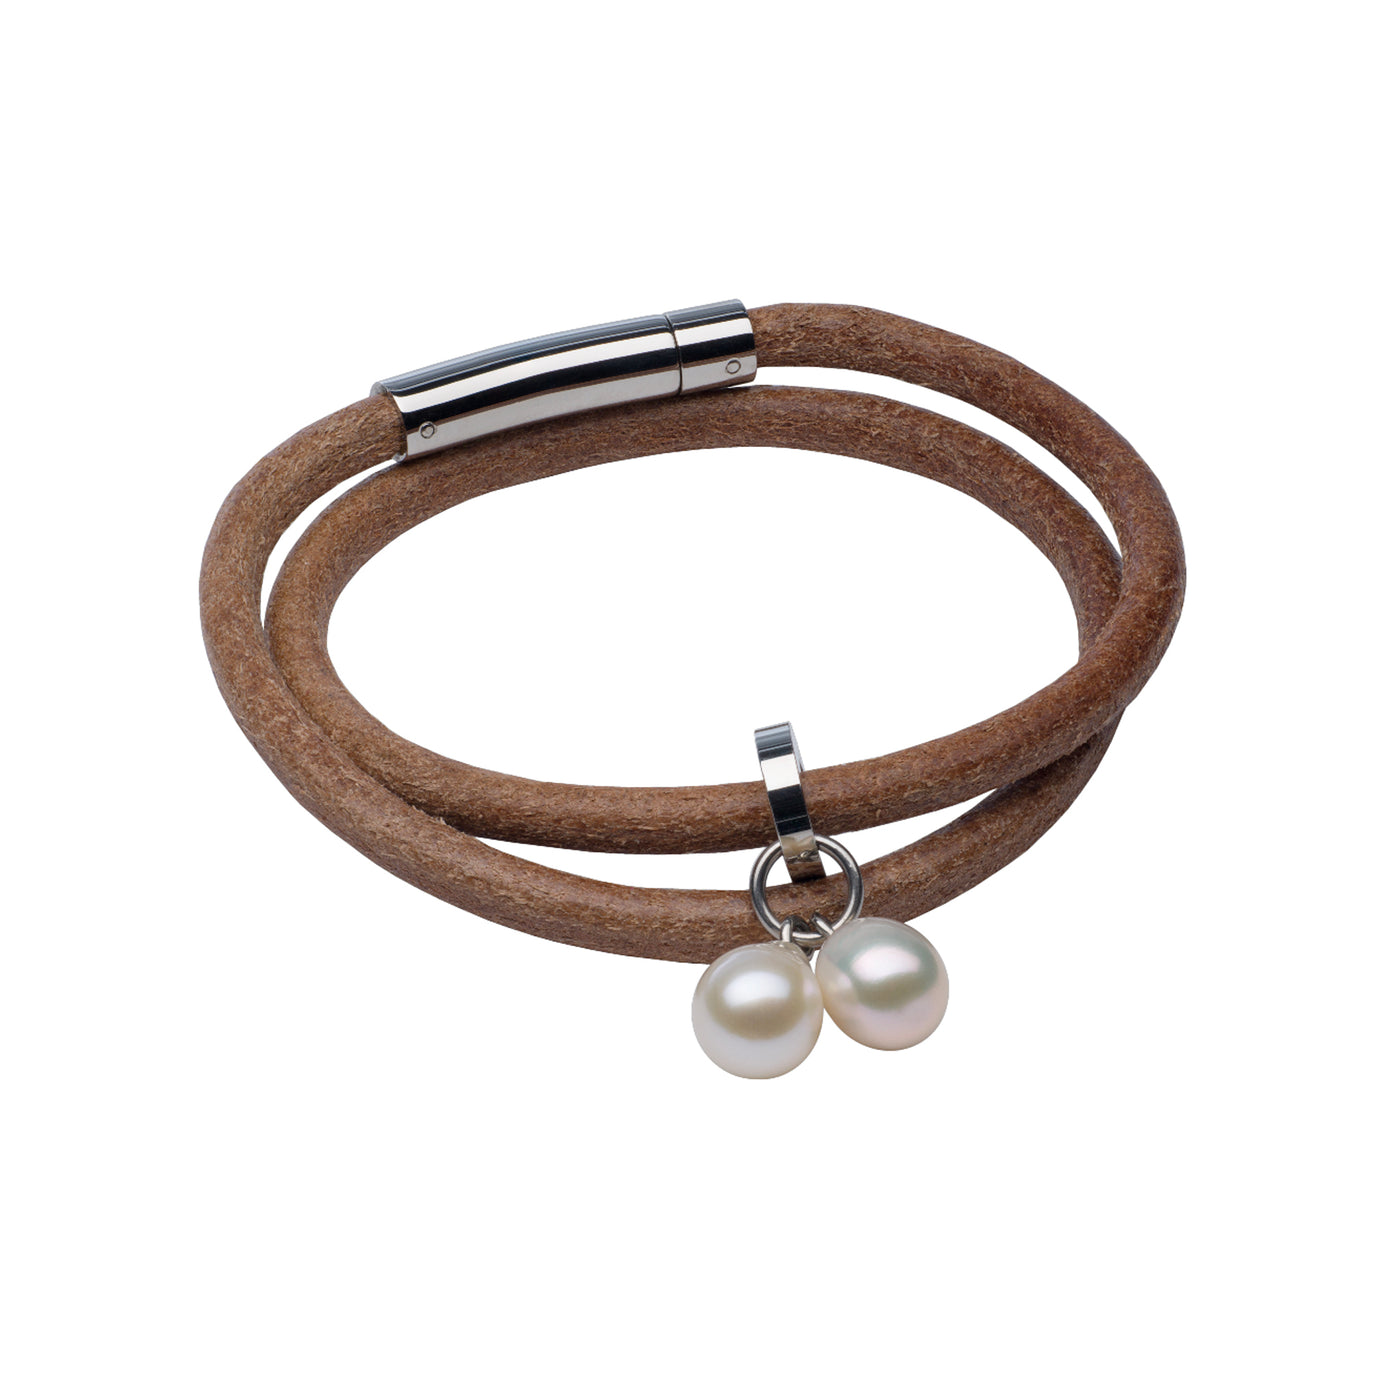 Round Leather Bracelet/Choker